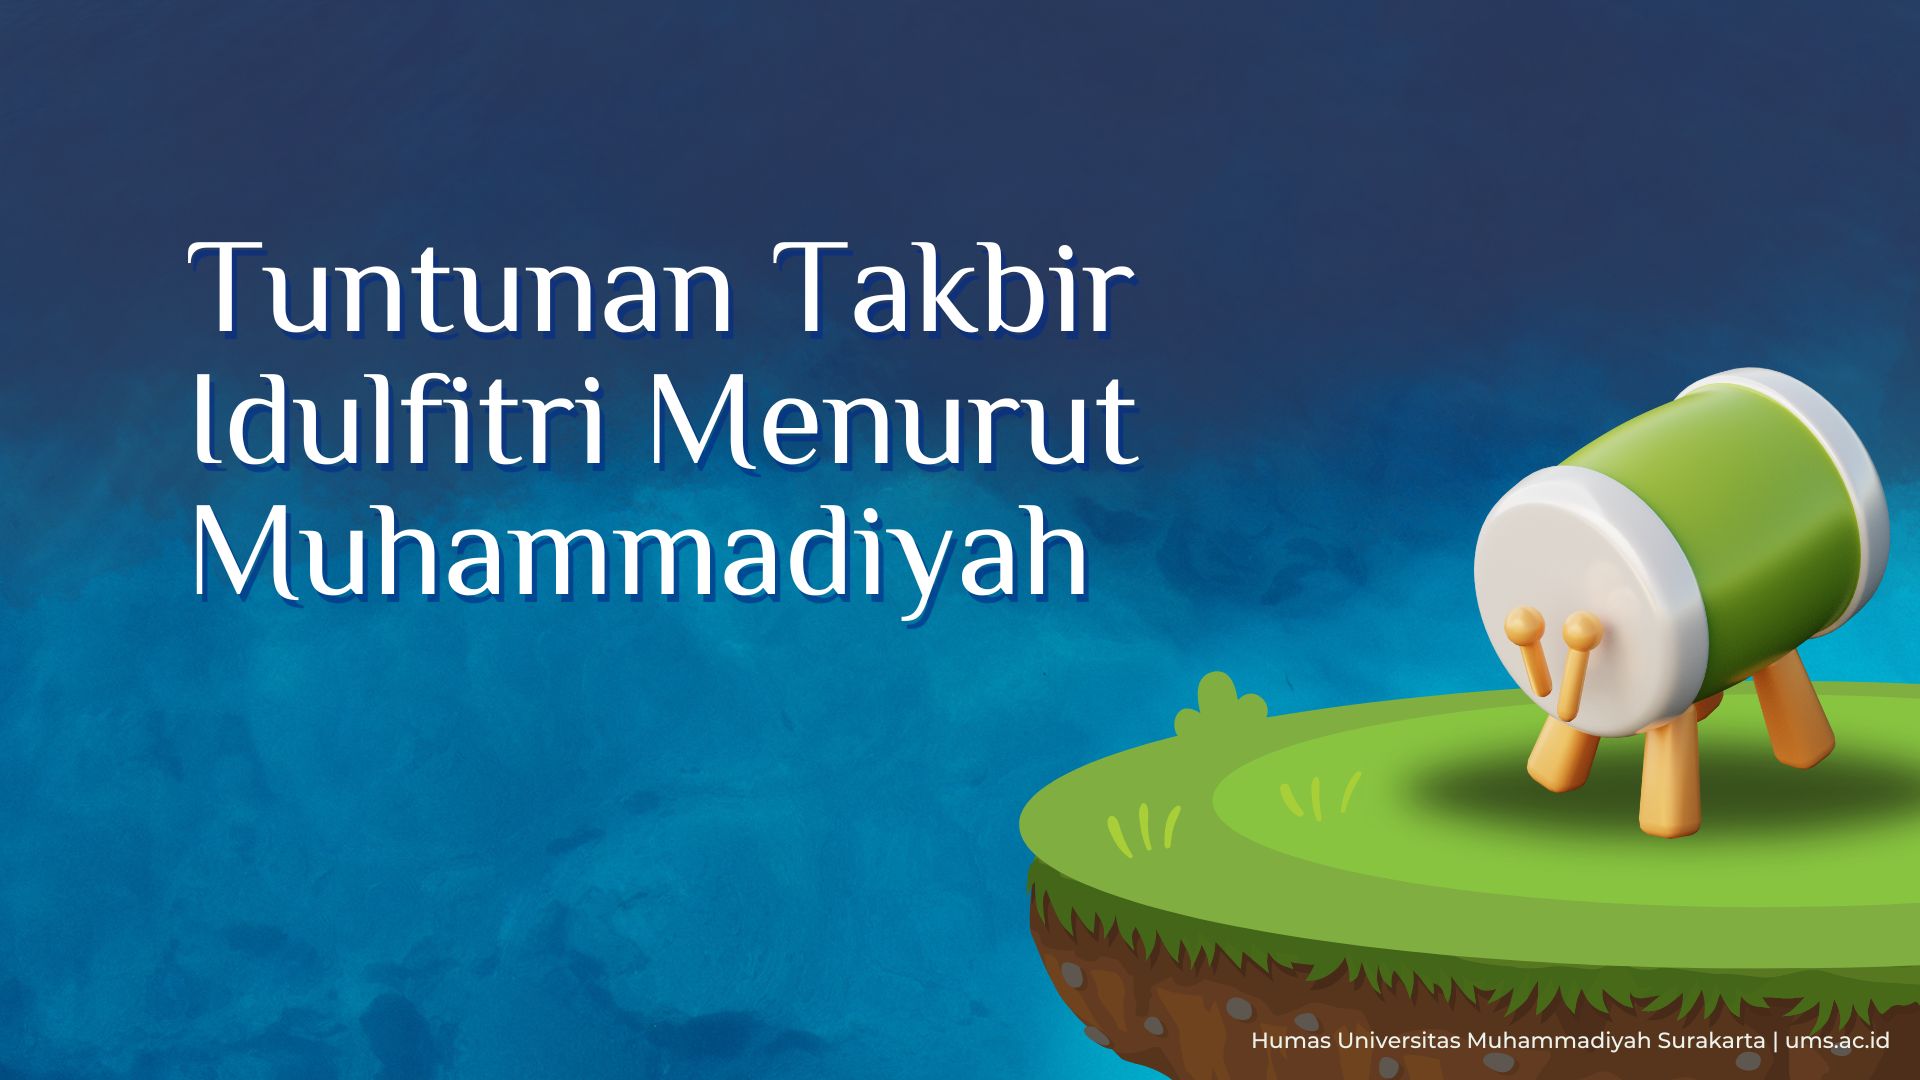 You are currently viewing Tuntunan Takbir Idulfitri Menurut Muhammadiyah